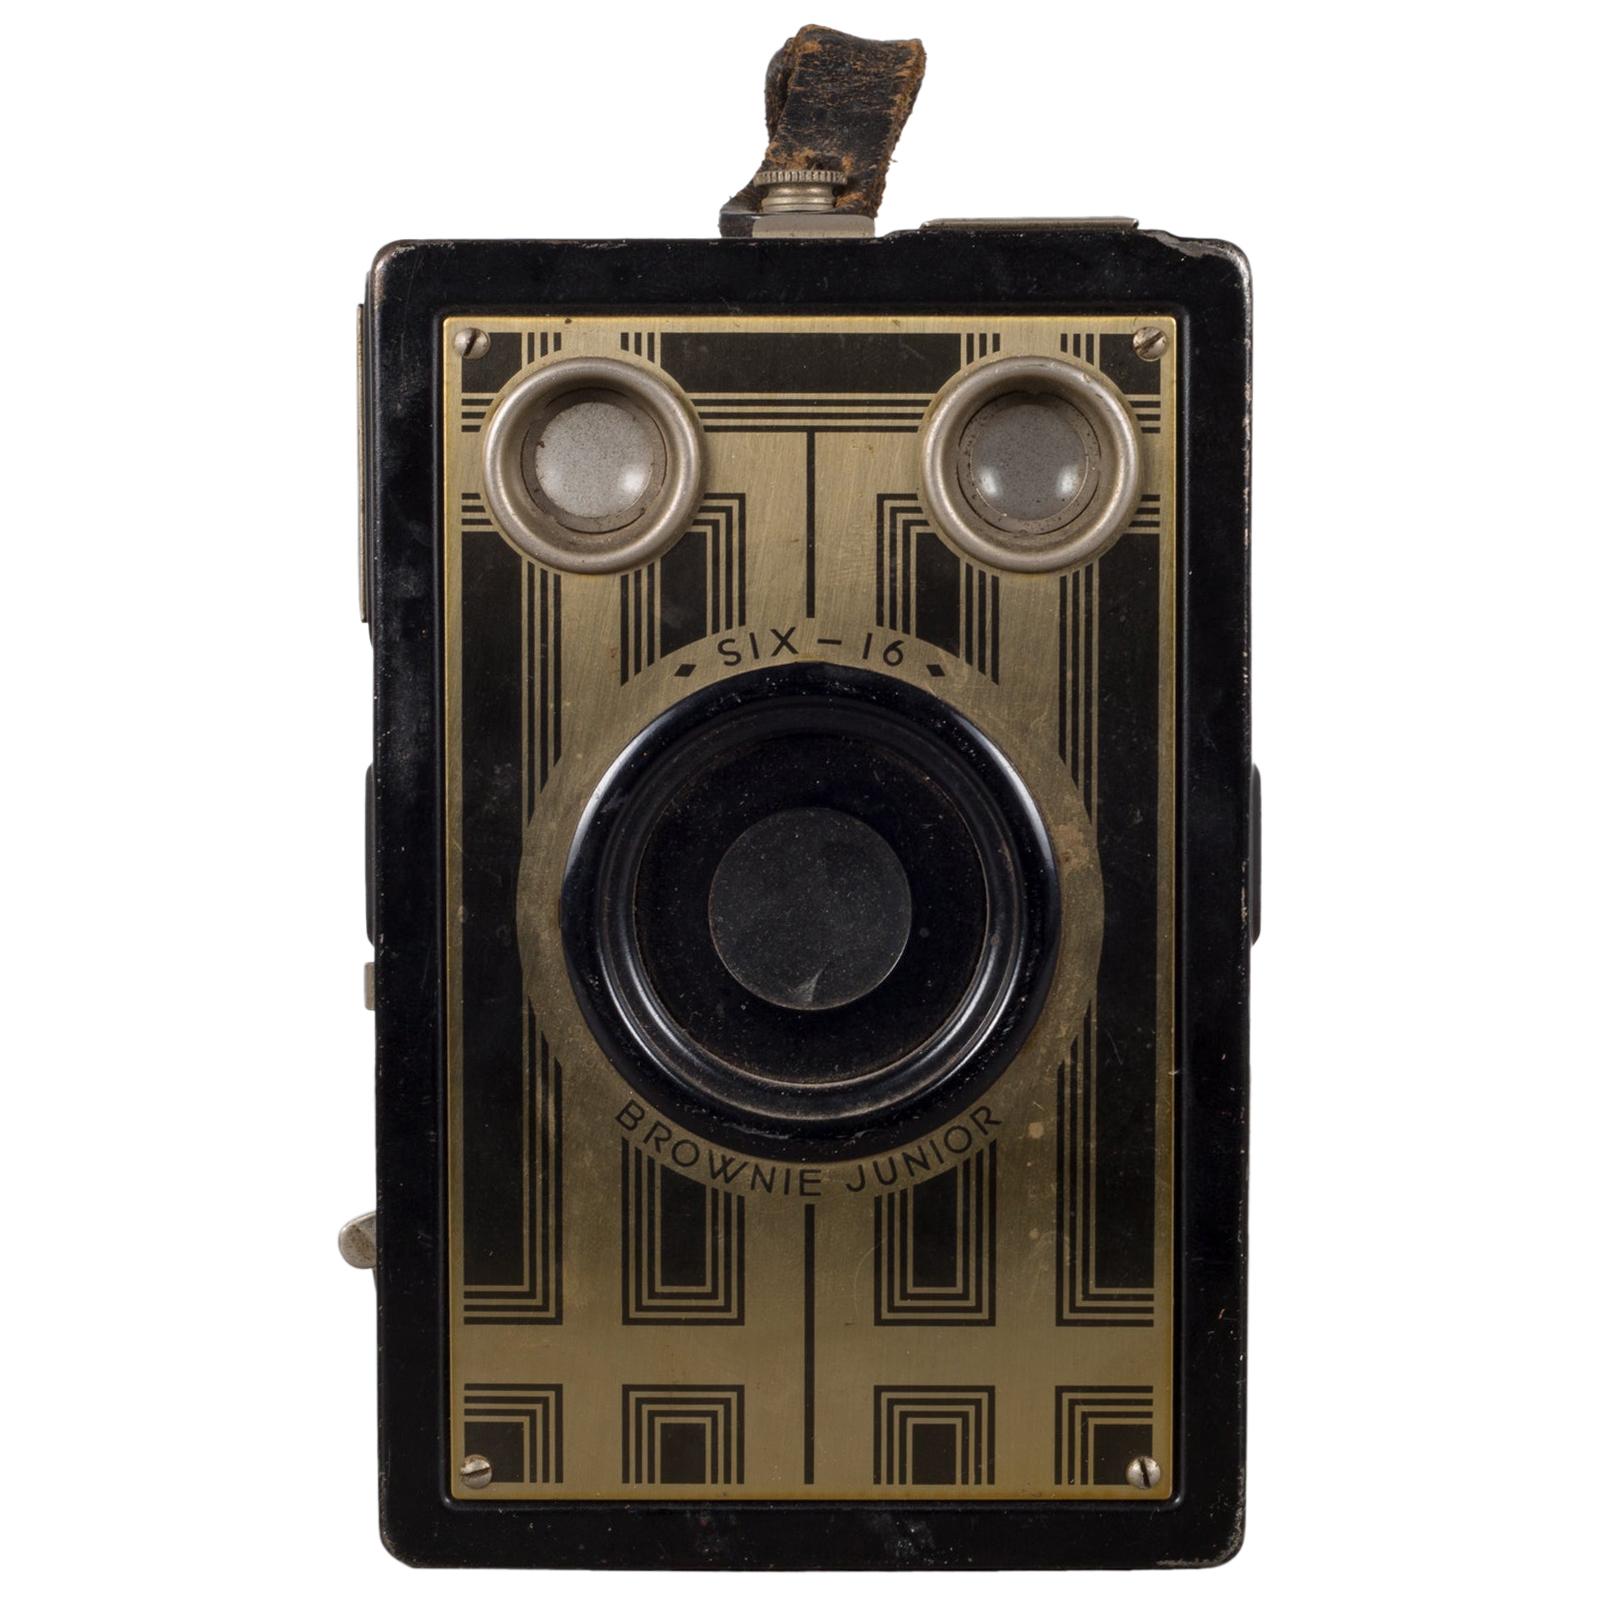 Eastman Kodak "Brownie Junior Six-16" Camera, circa 1934-1942